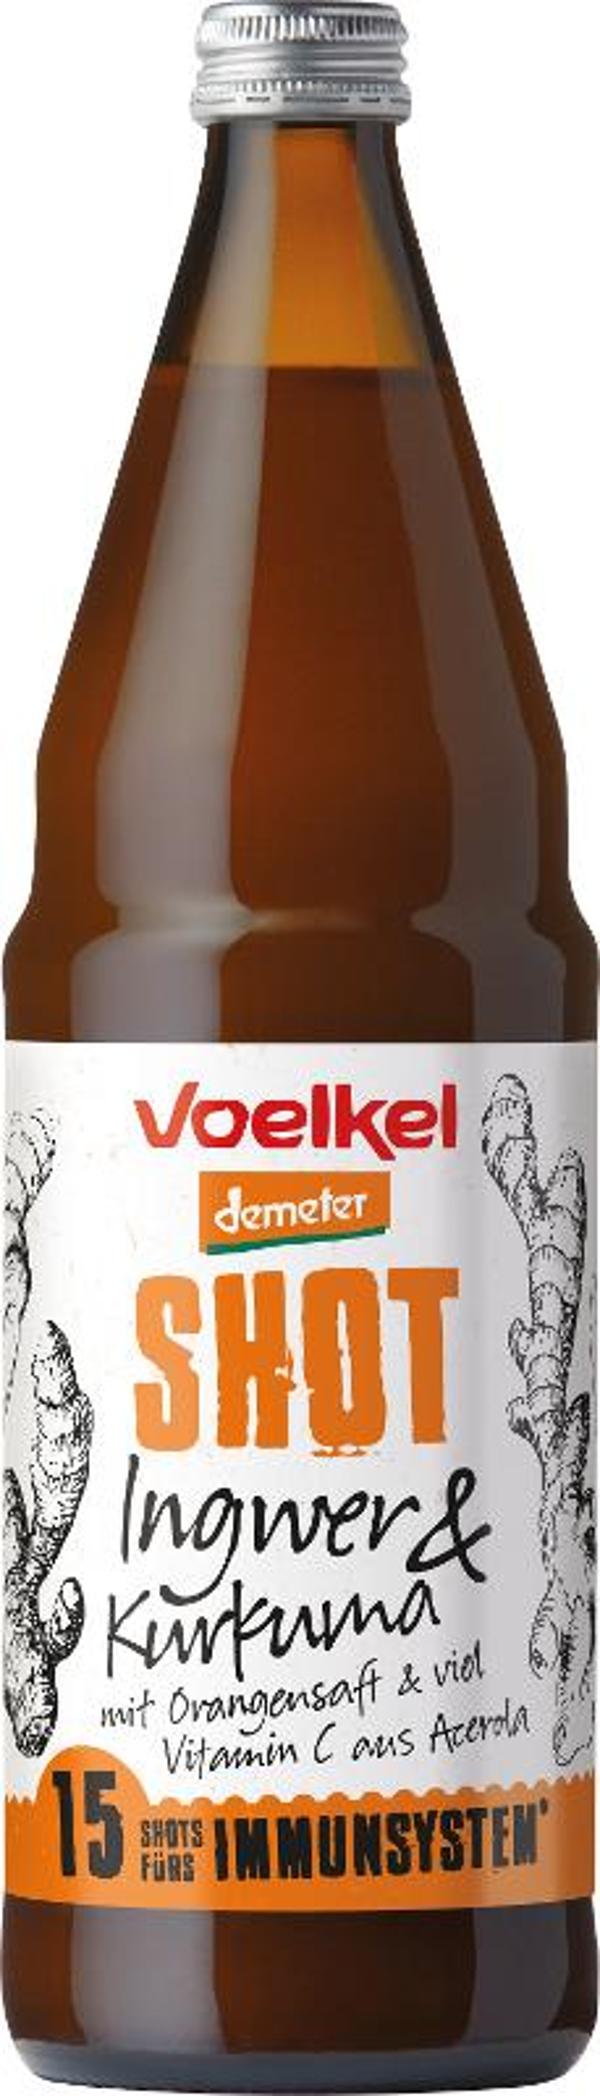 Produktfoto zu Voelkel Shot Ingwer Kurkuma - 0,75l